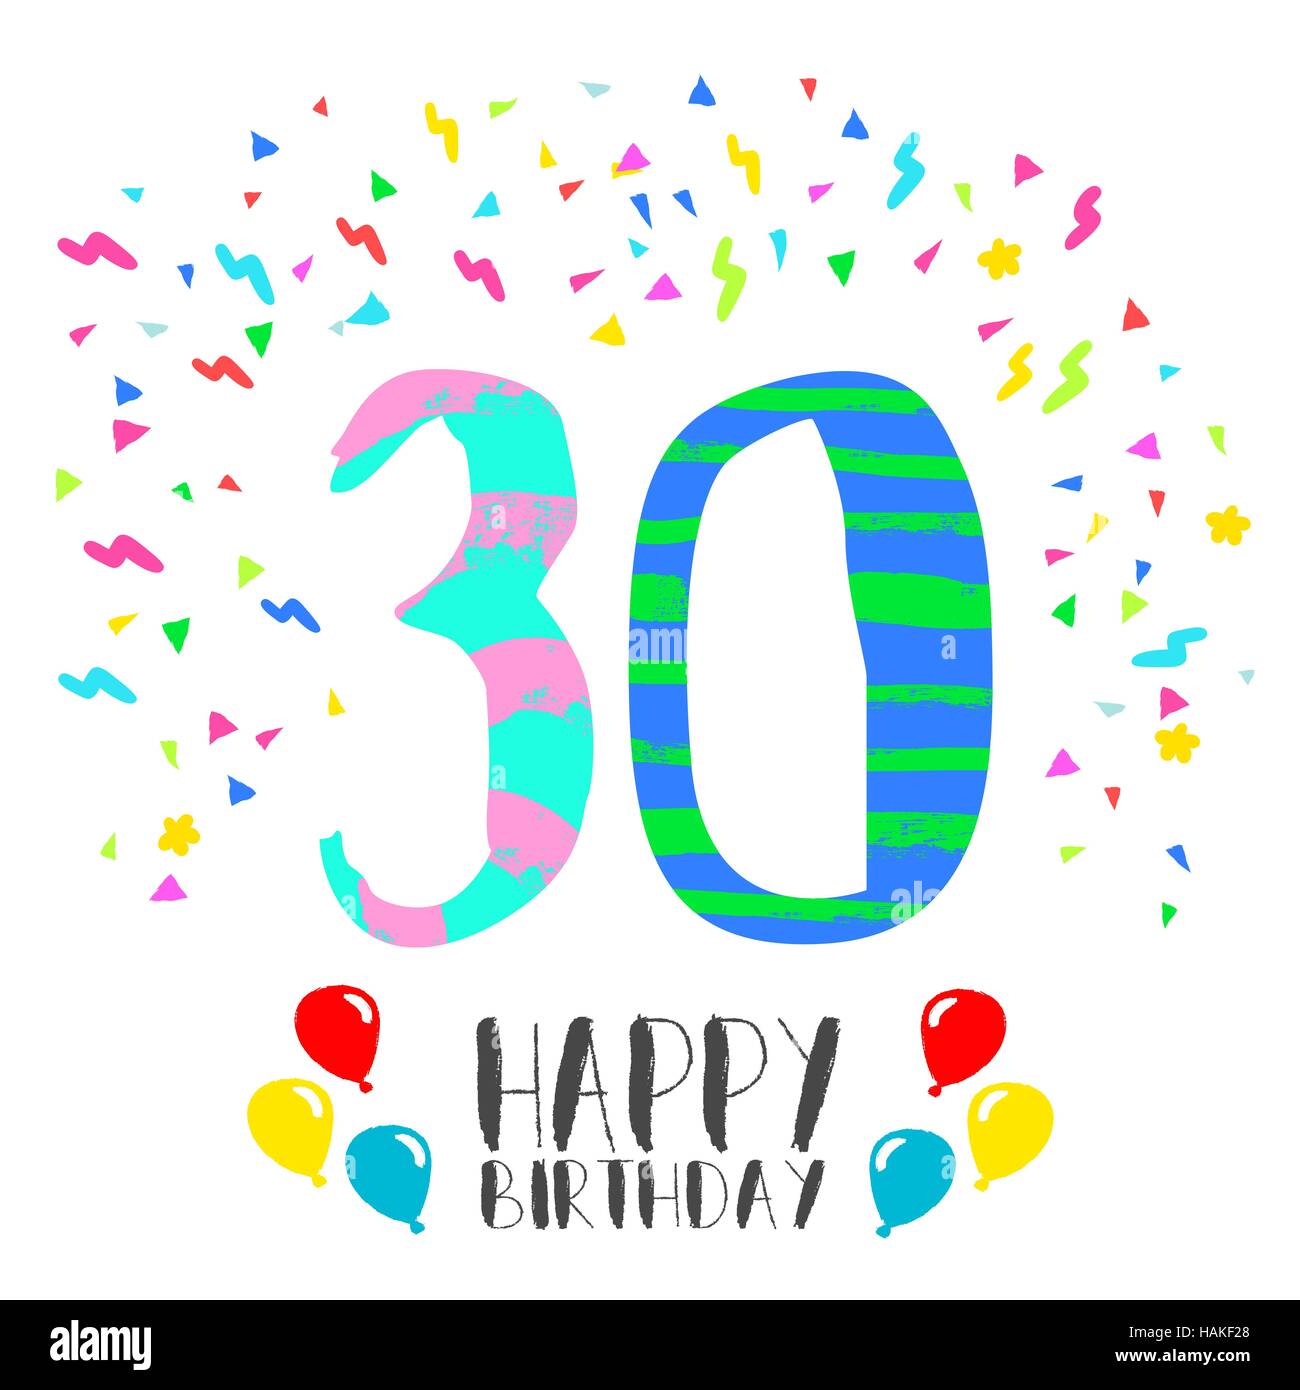 30th Birthday Card Stock Photos & 30th Birthday Card Stock Images - Alamy